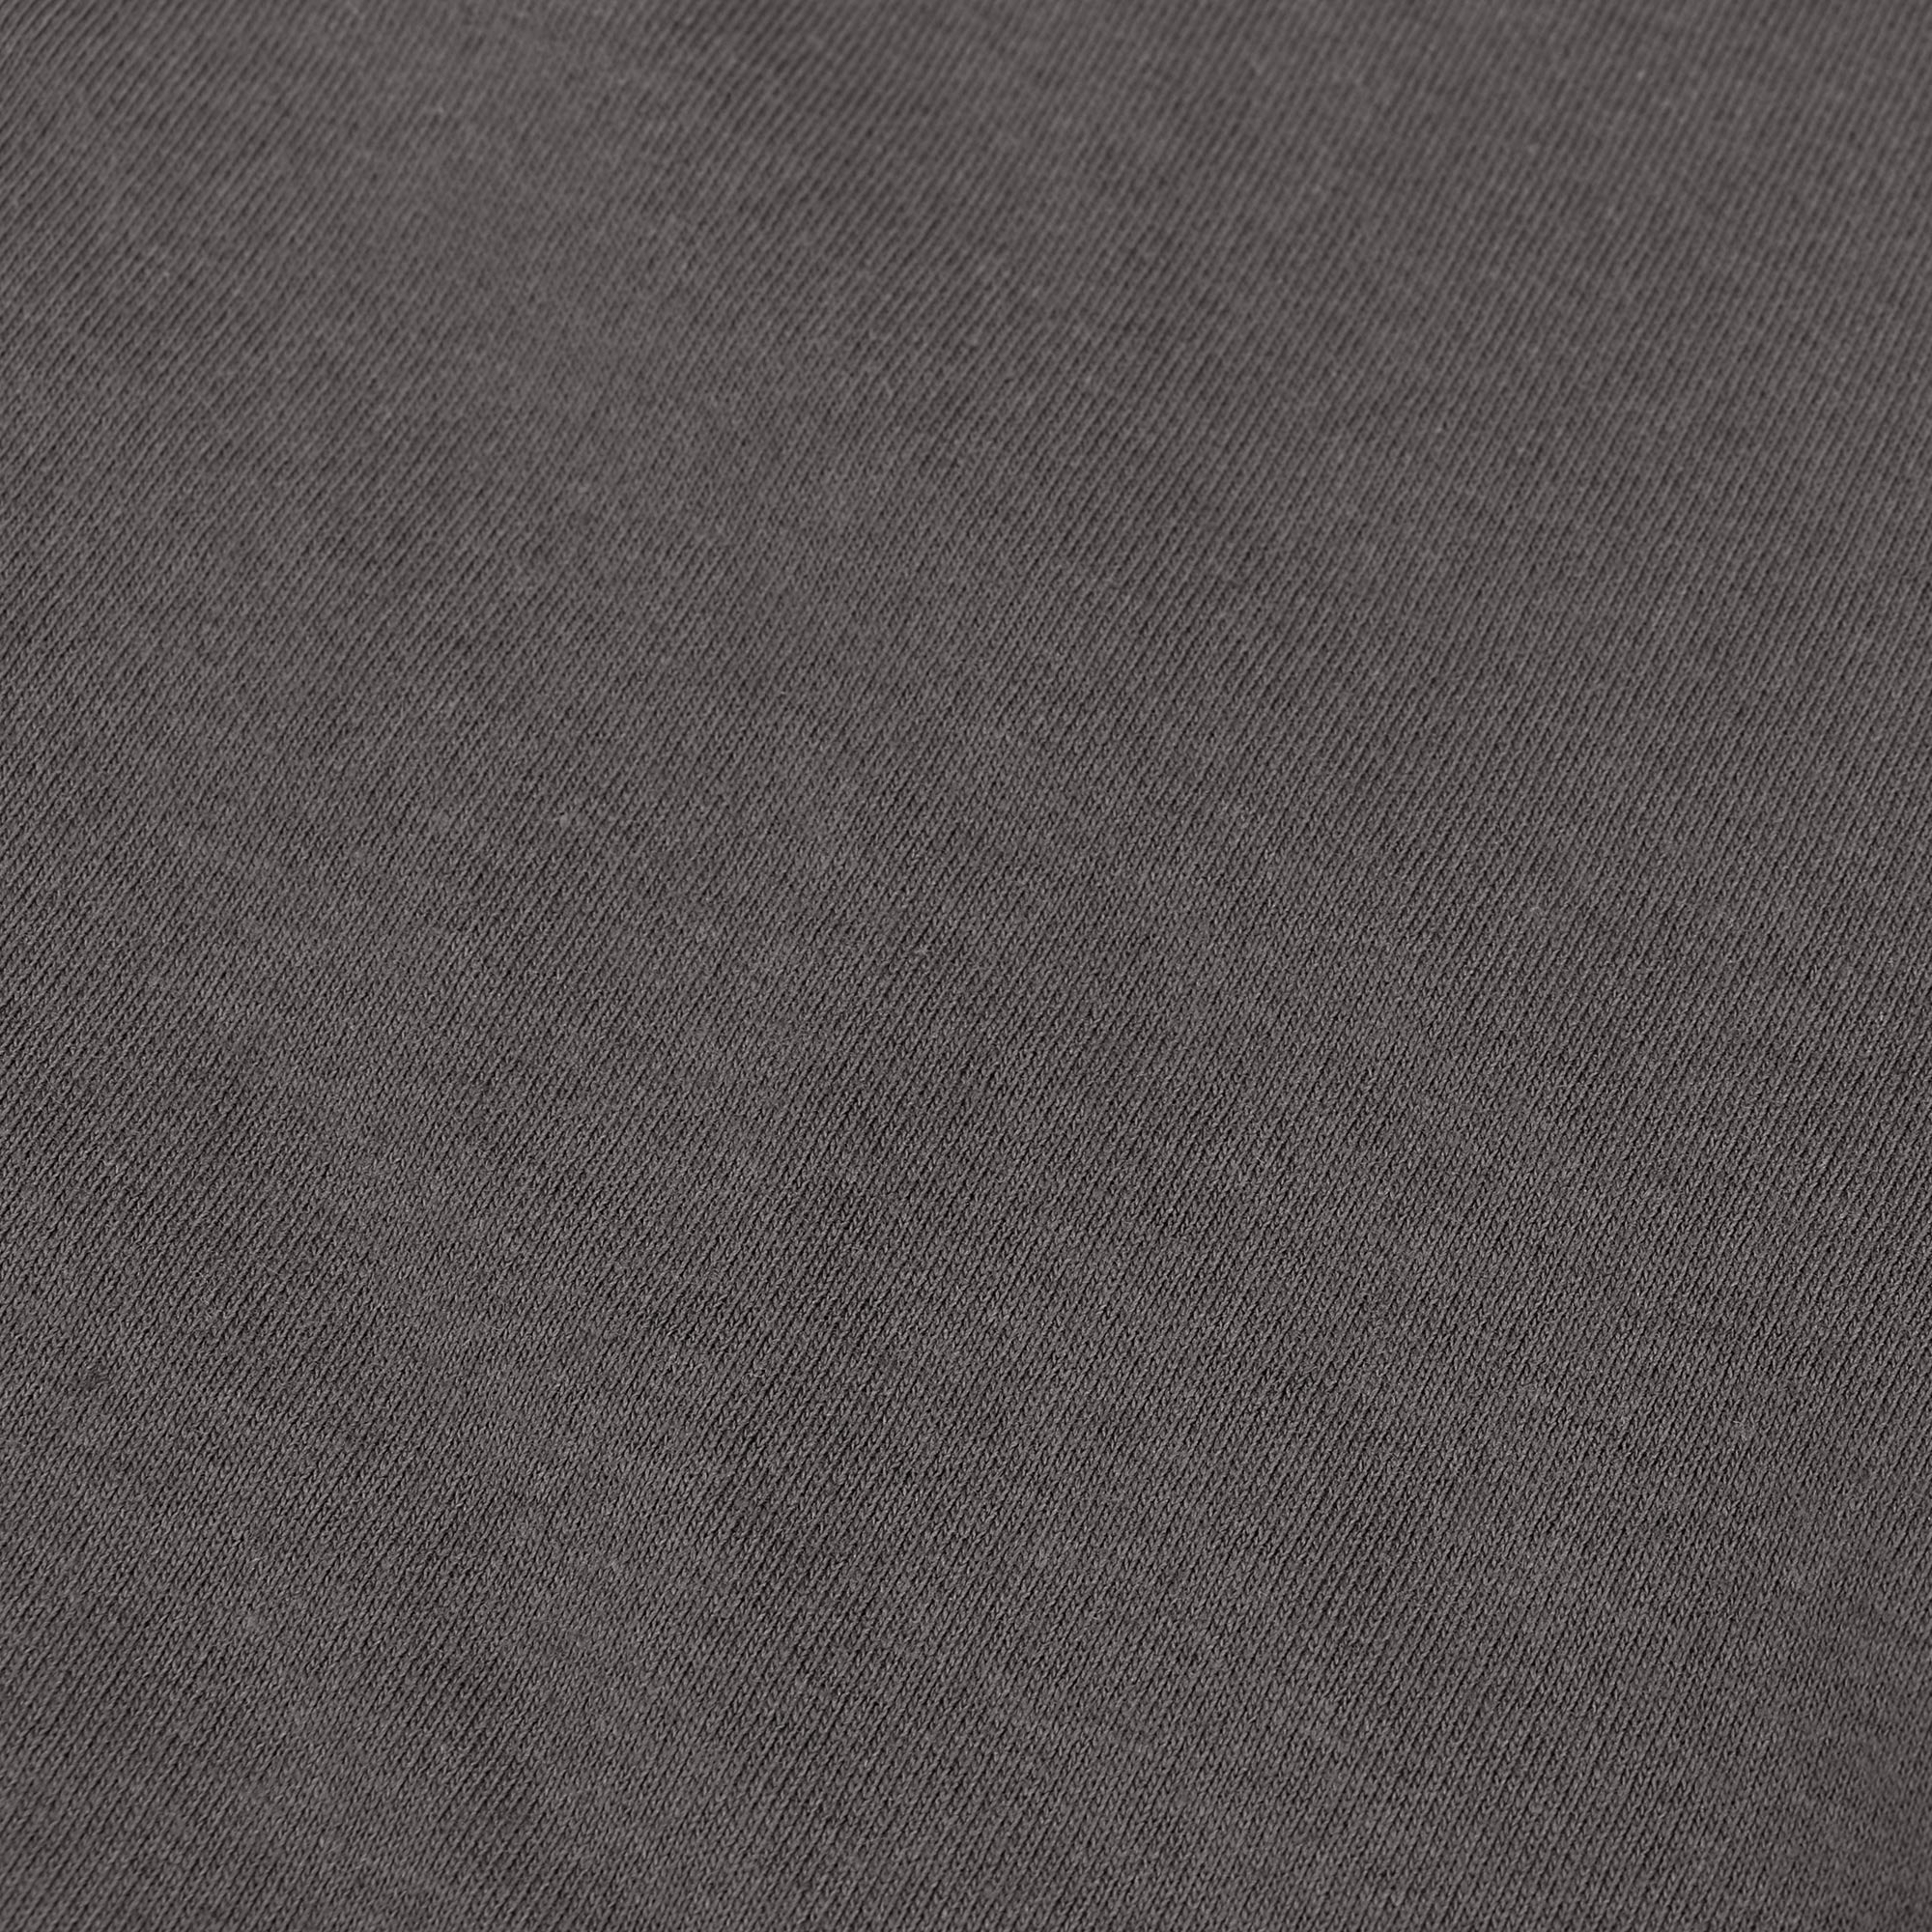 Мужские шорты Pantelemone PHB-112 темно-серые 58, цвет темно-серый, размер 58 - фото 4